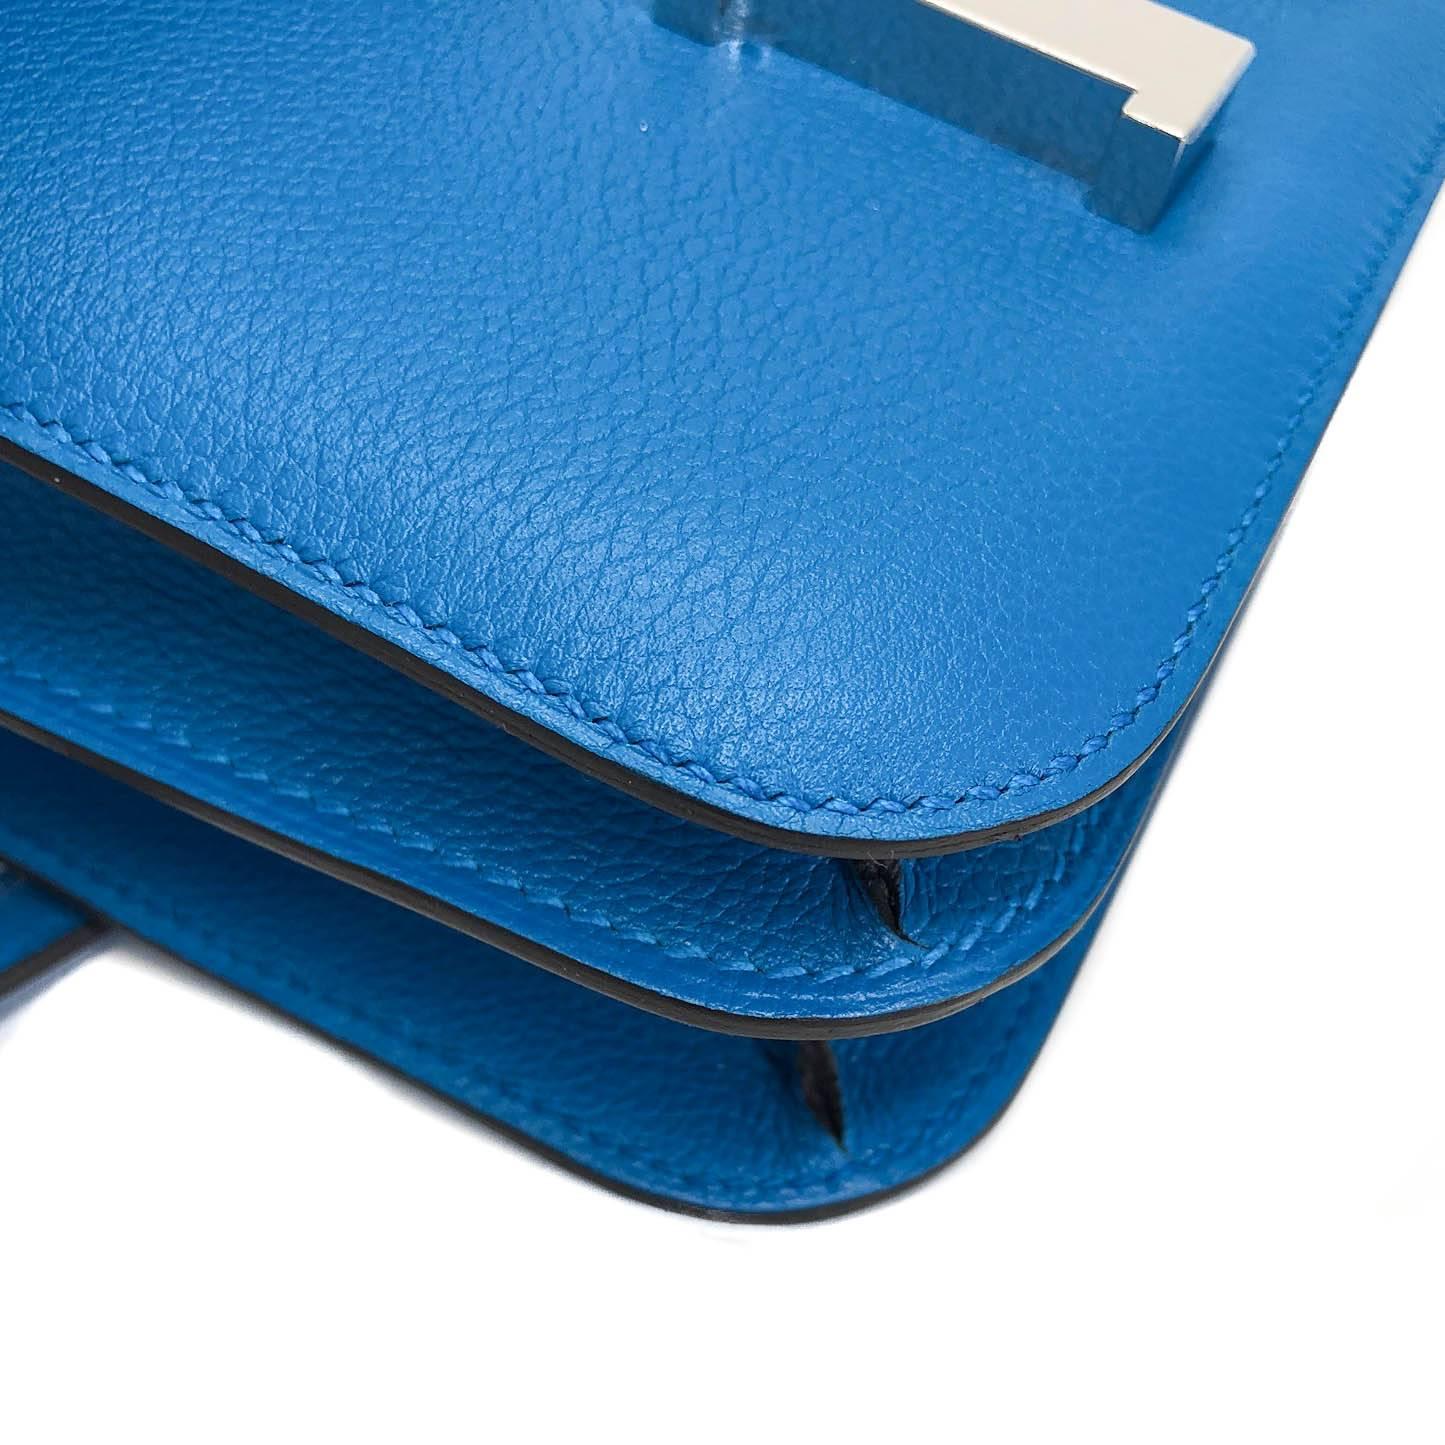 Hermes Cross body Handbag Constance 18 in Bleu Zanzibar with Palladium Hardware For Sale 9